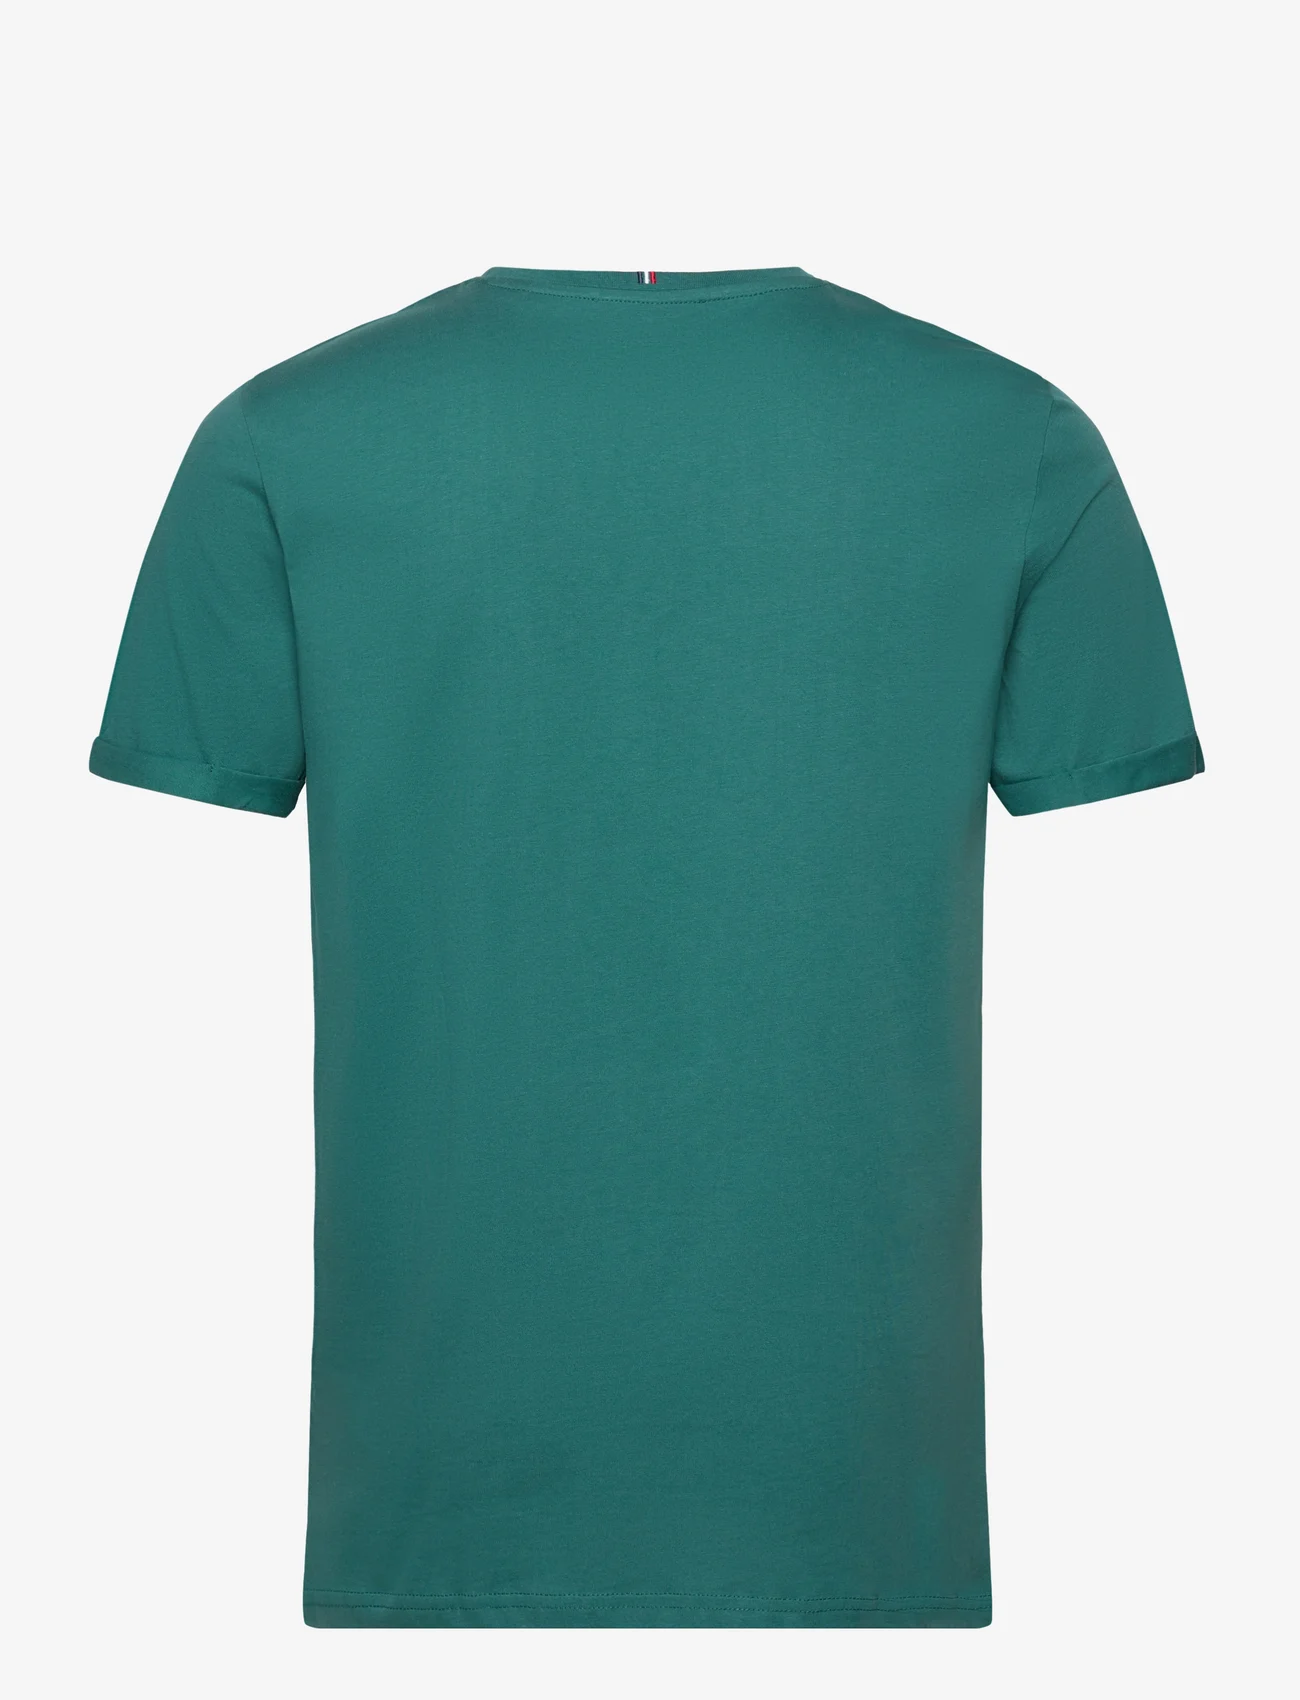 Les Deux - Nørregaard T-Shirt - Seasonal - basic t-shirts - pacific ocean/orange - 1